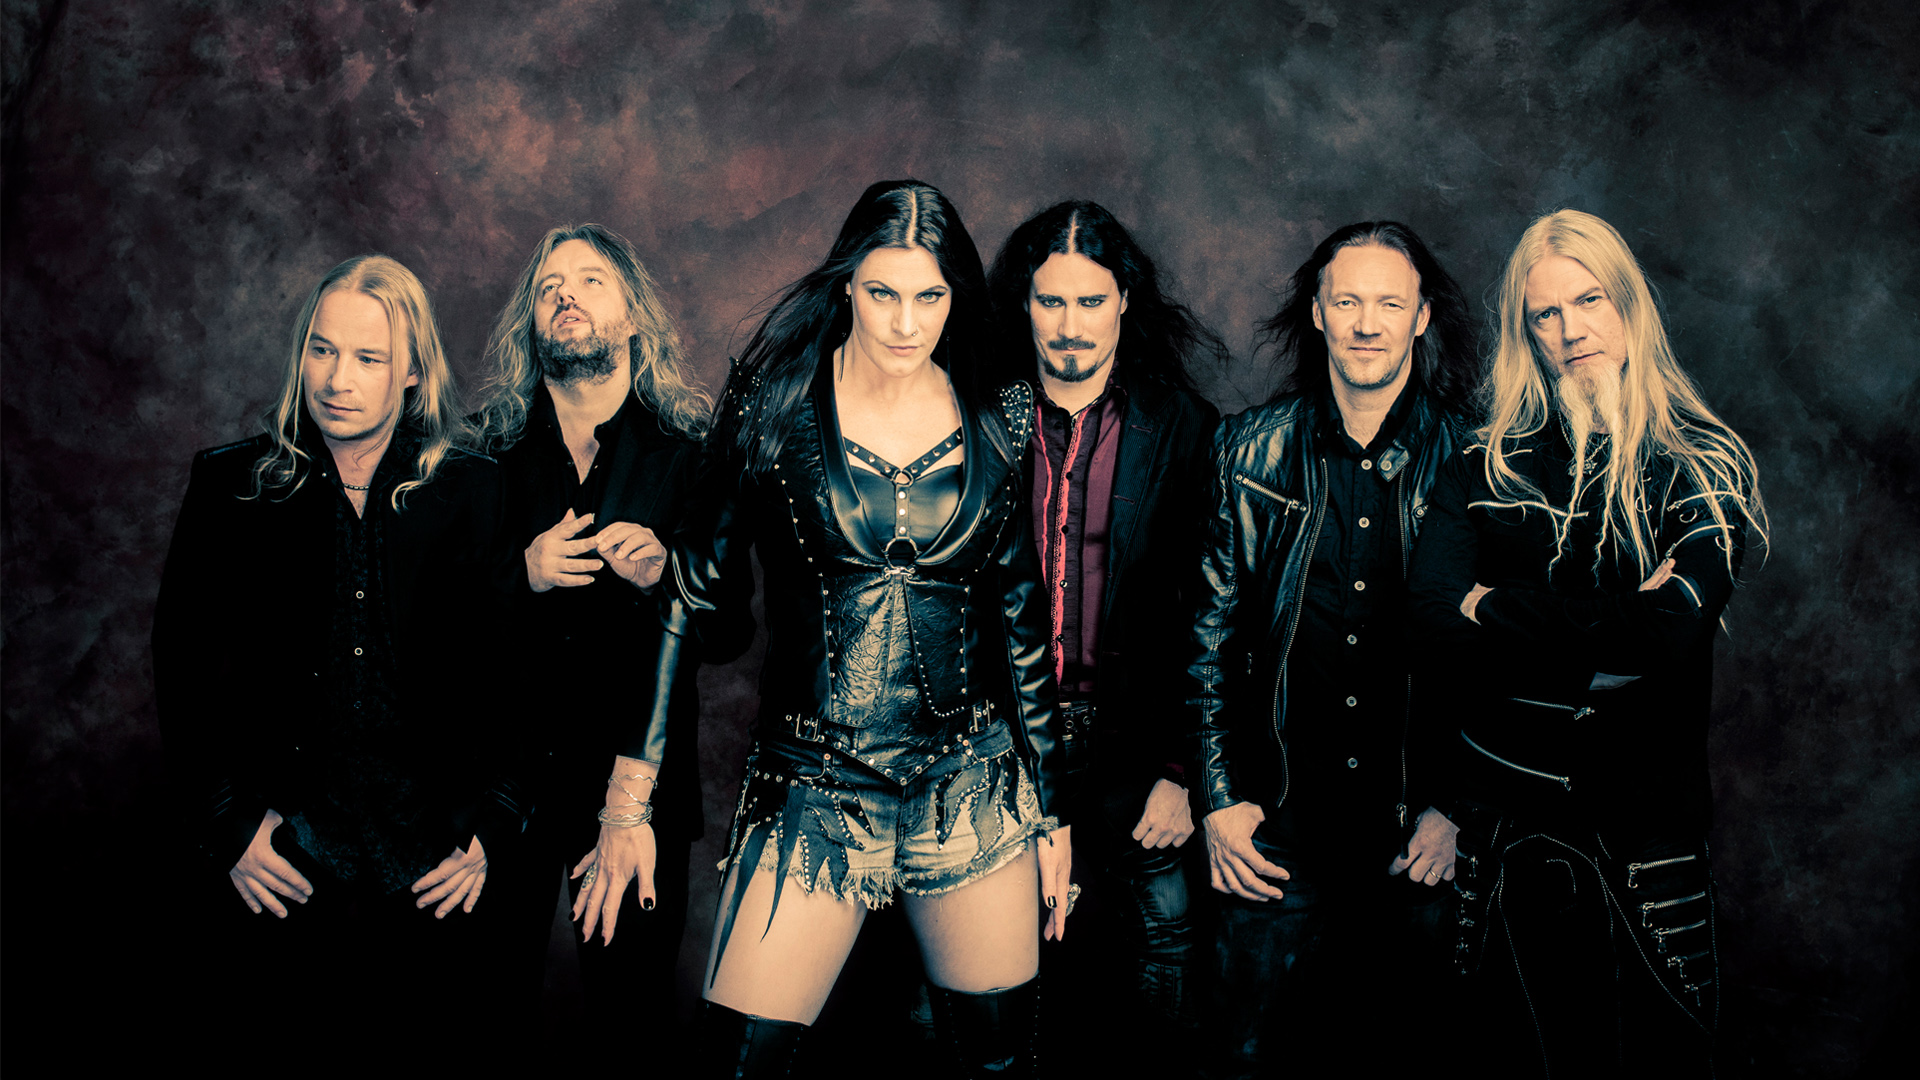 Nightwish Music Band Wallpaper In High Quality